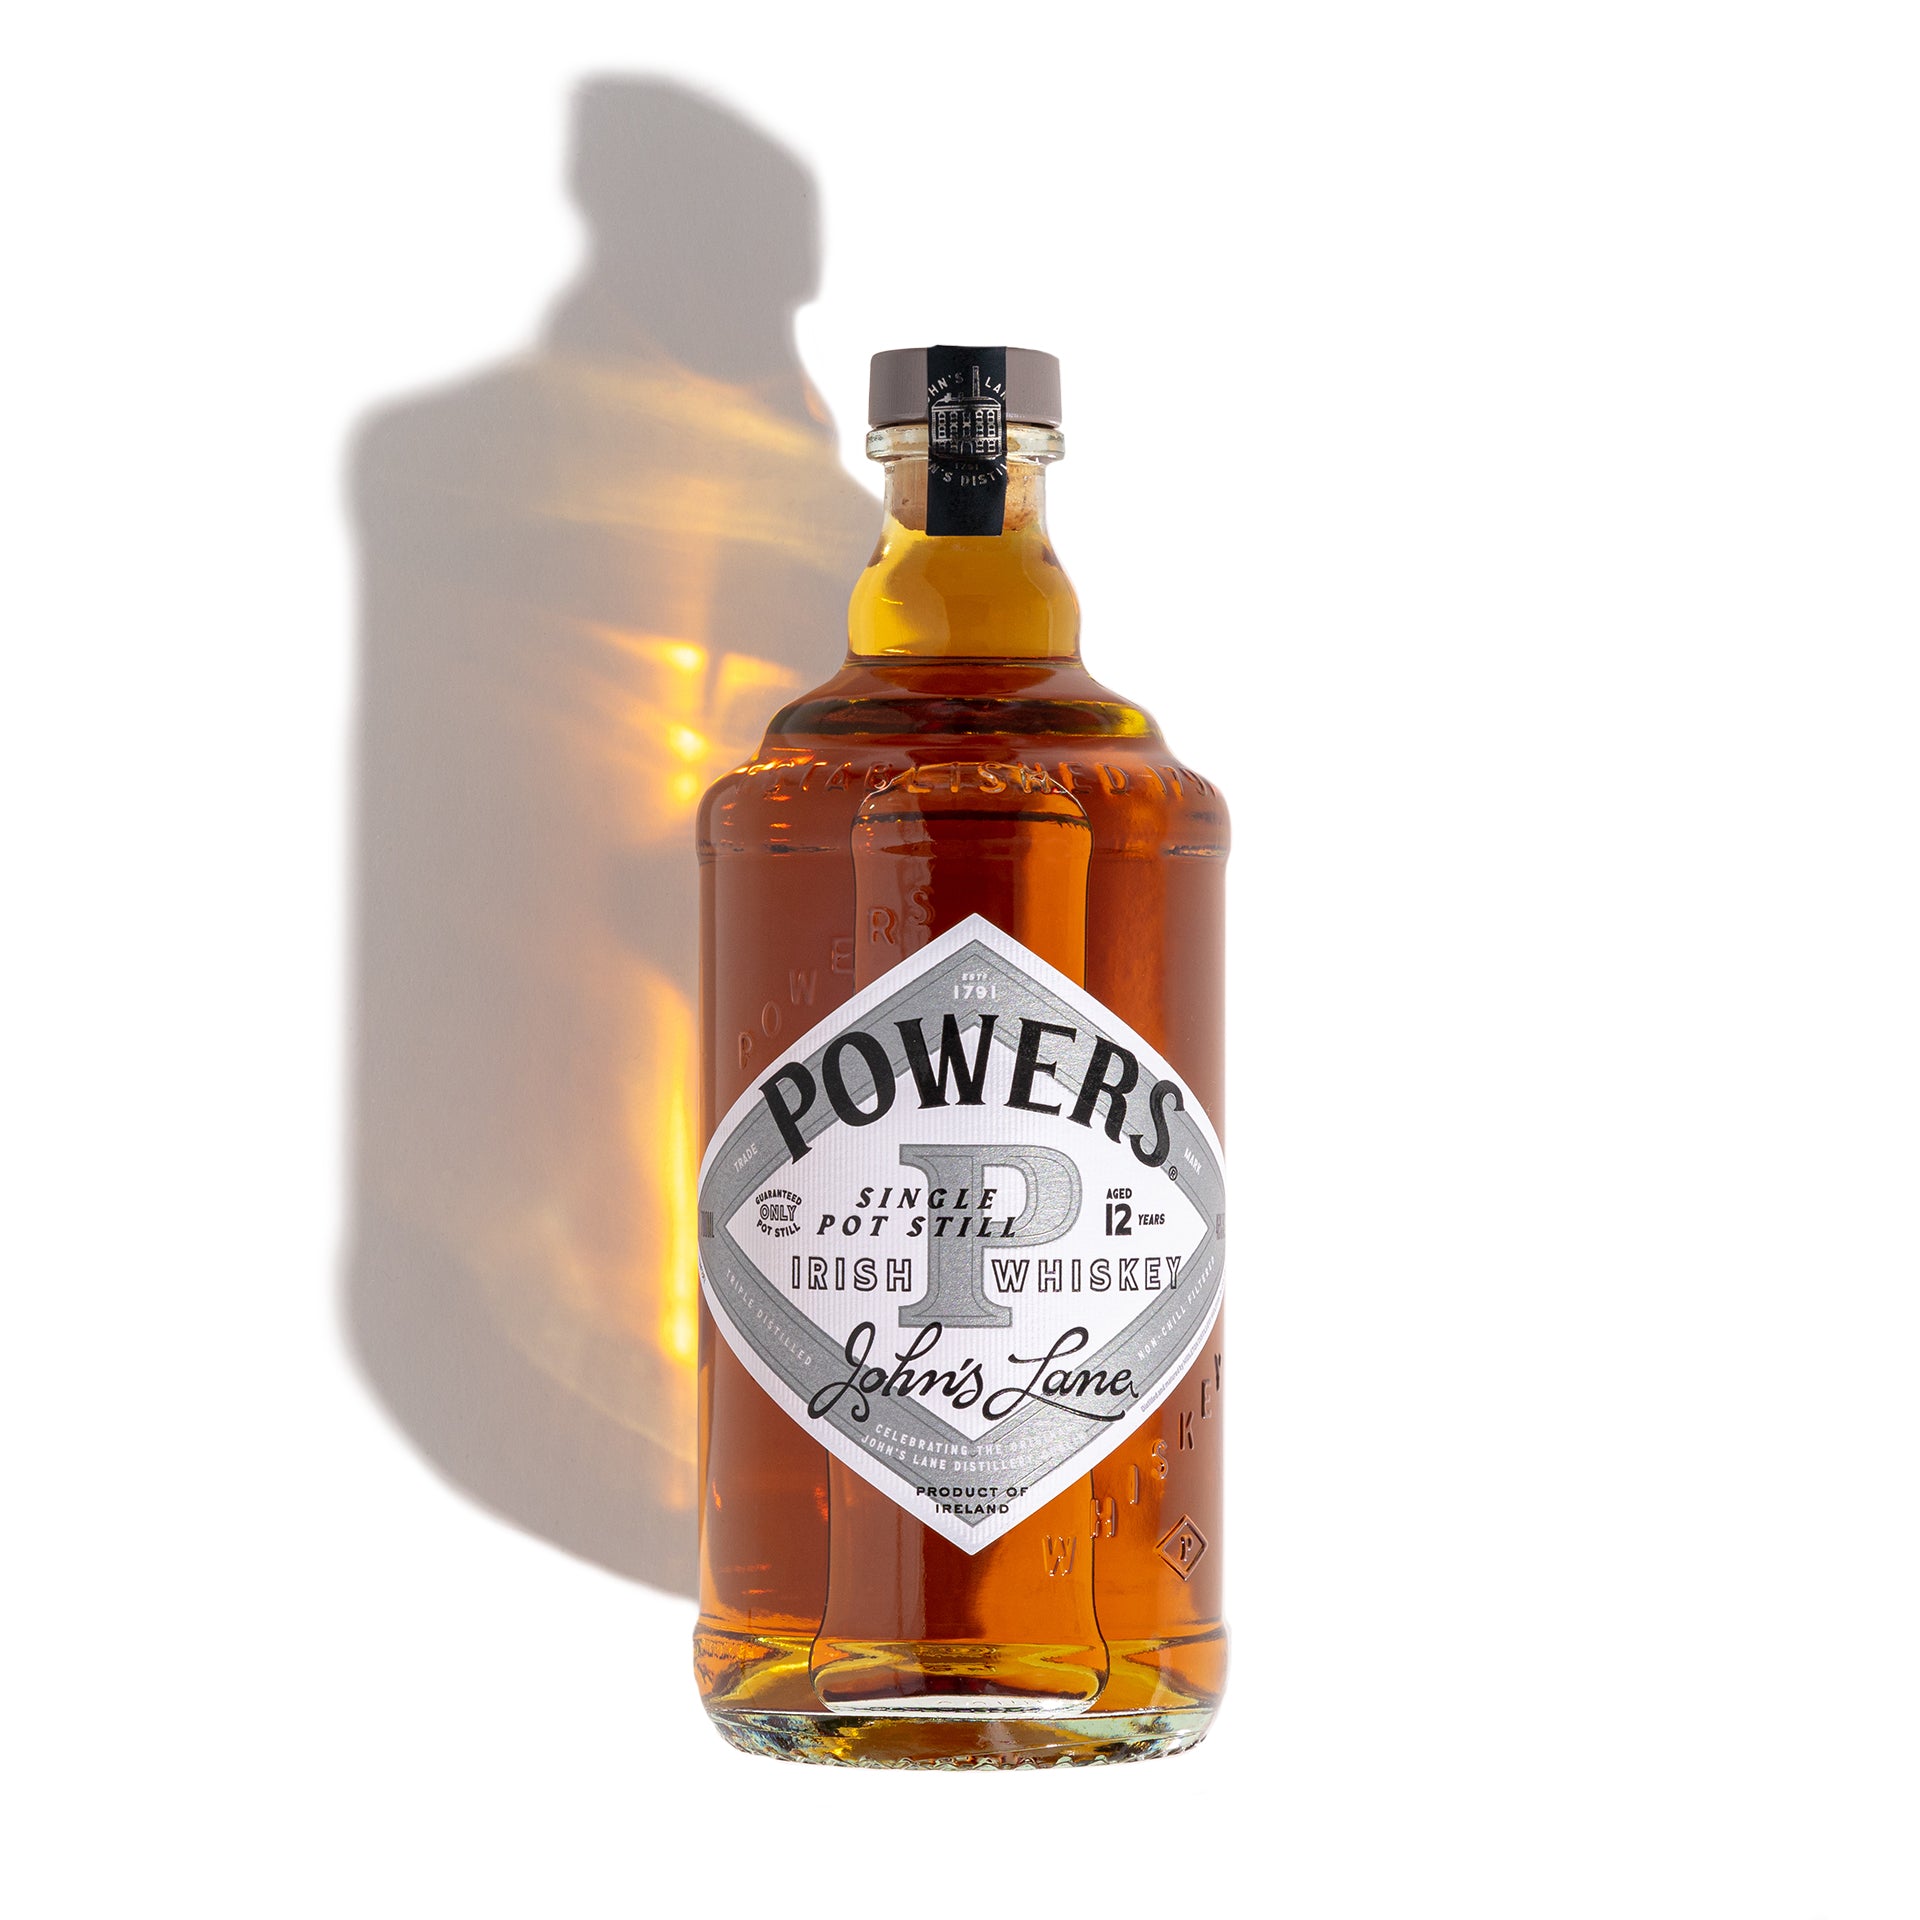 Whiskey Powers - Whiskey irlandais riche et complexe